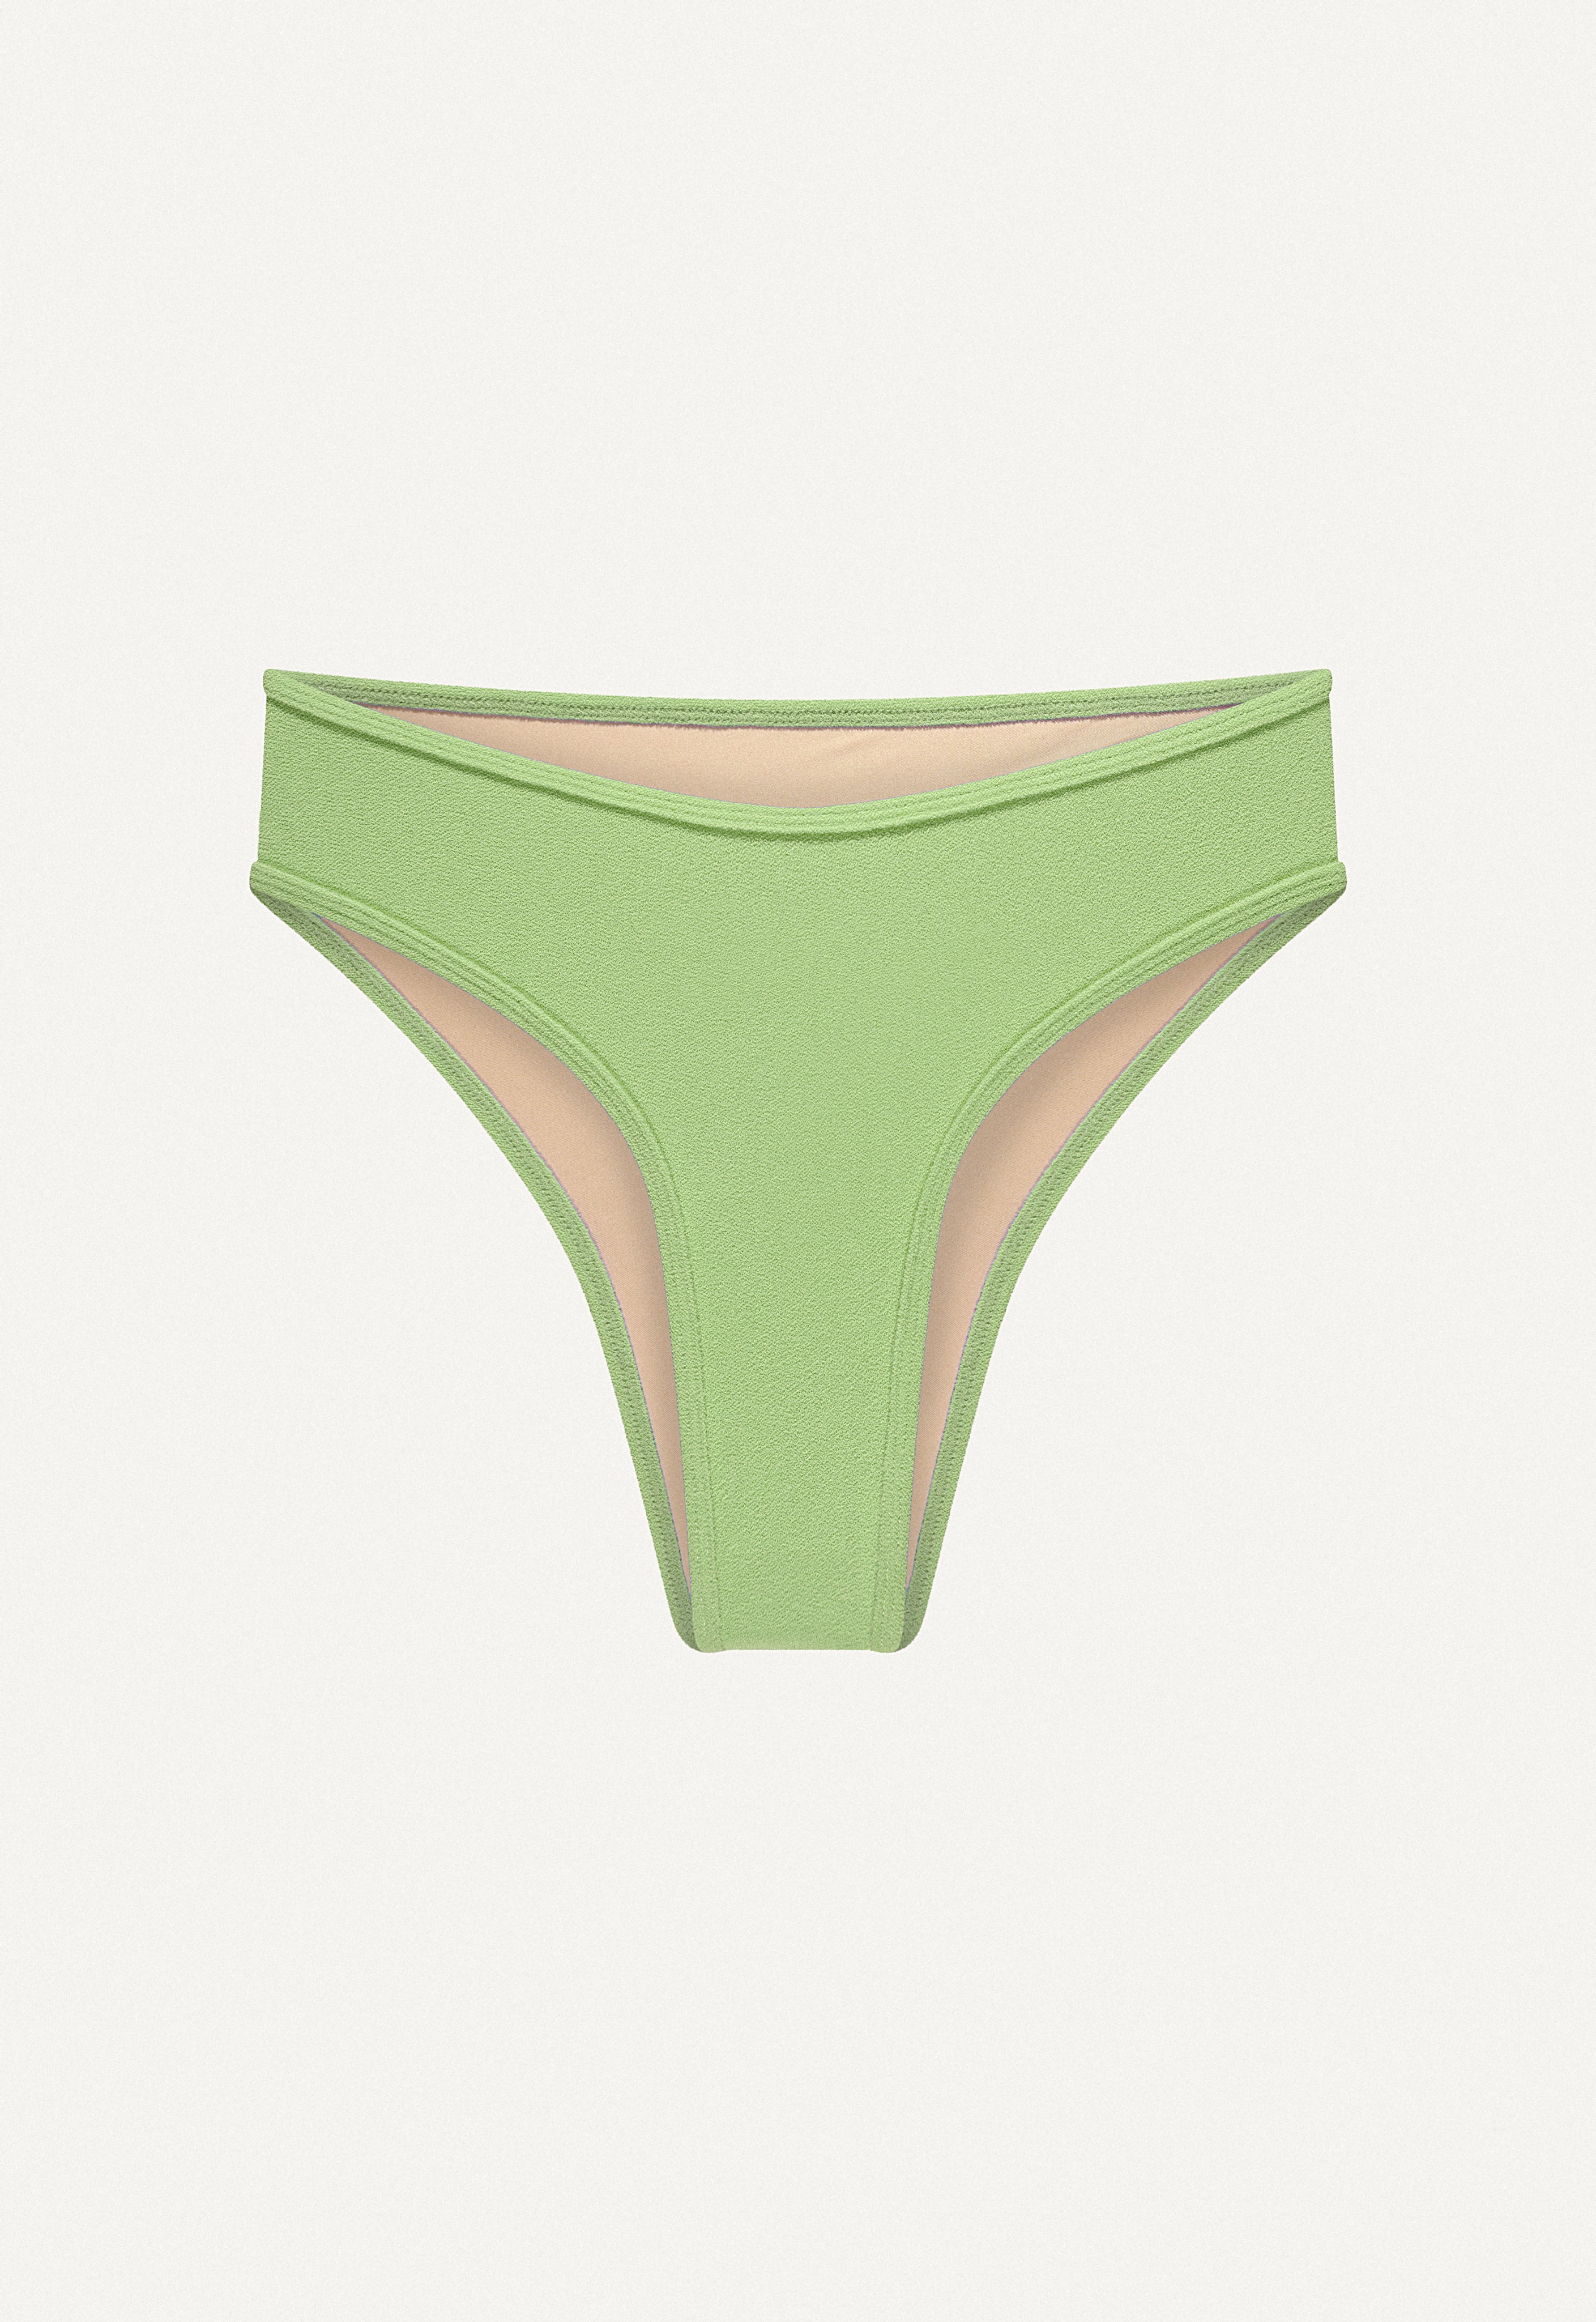 Bikini Bottom "Calima" in linden green terry